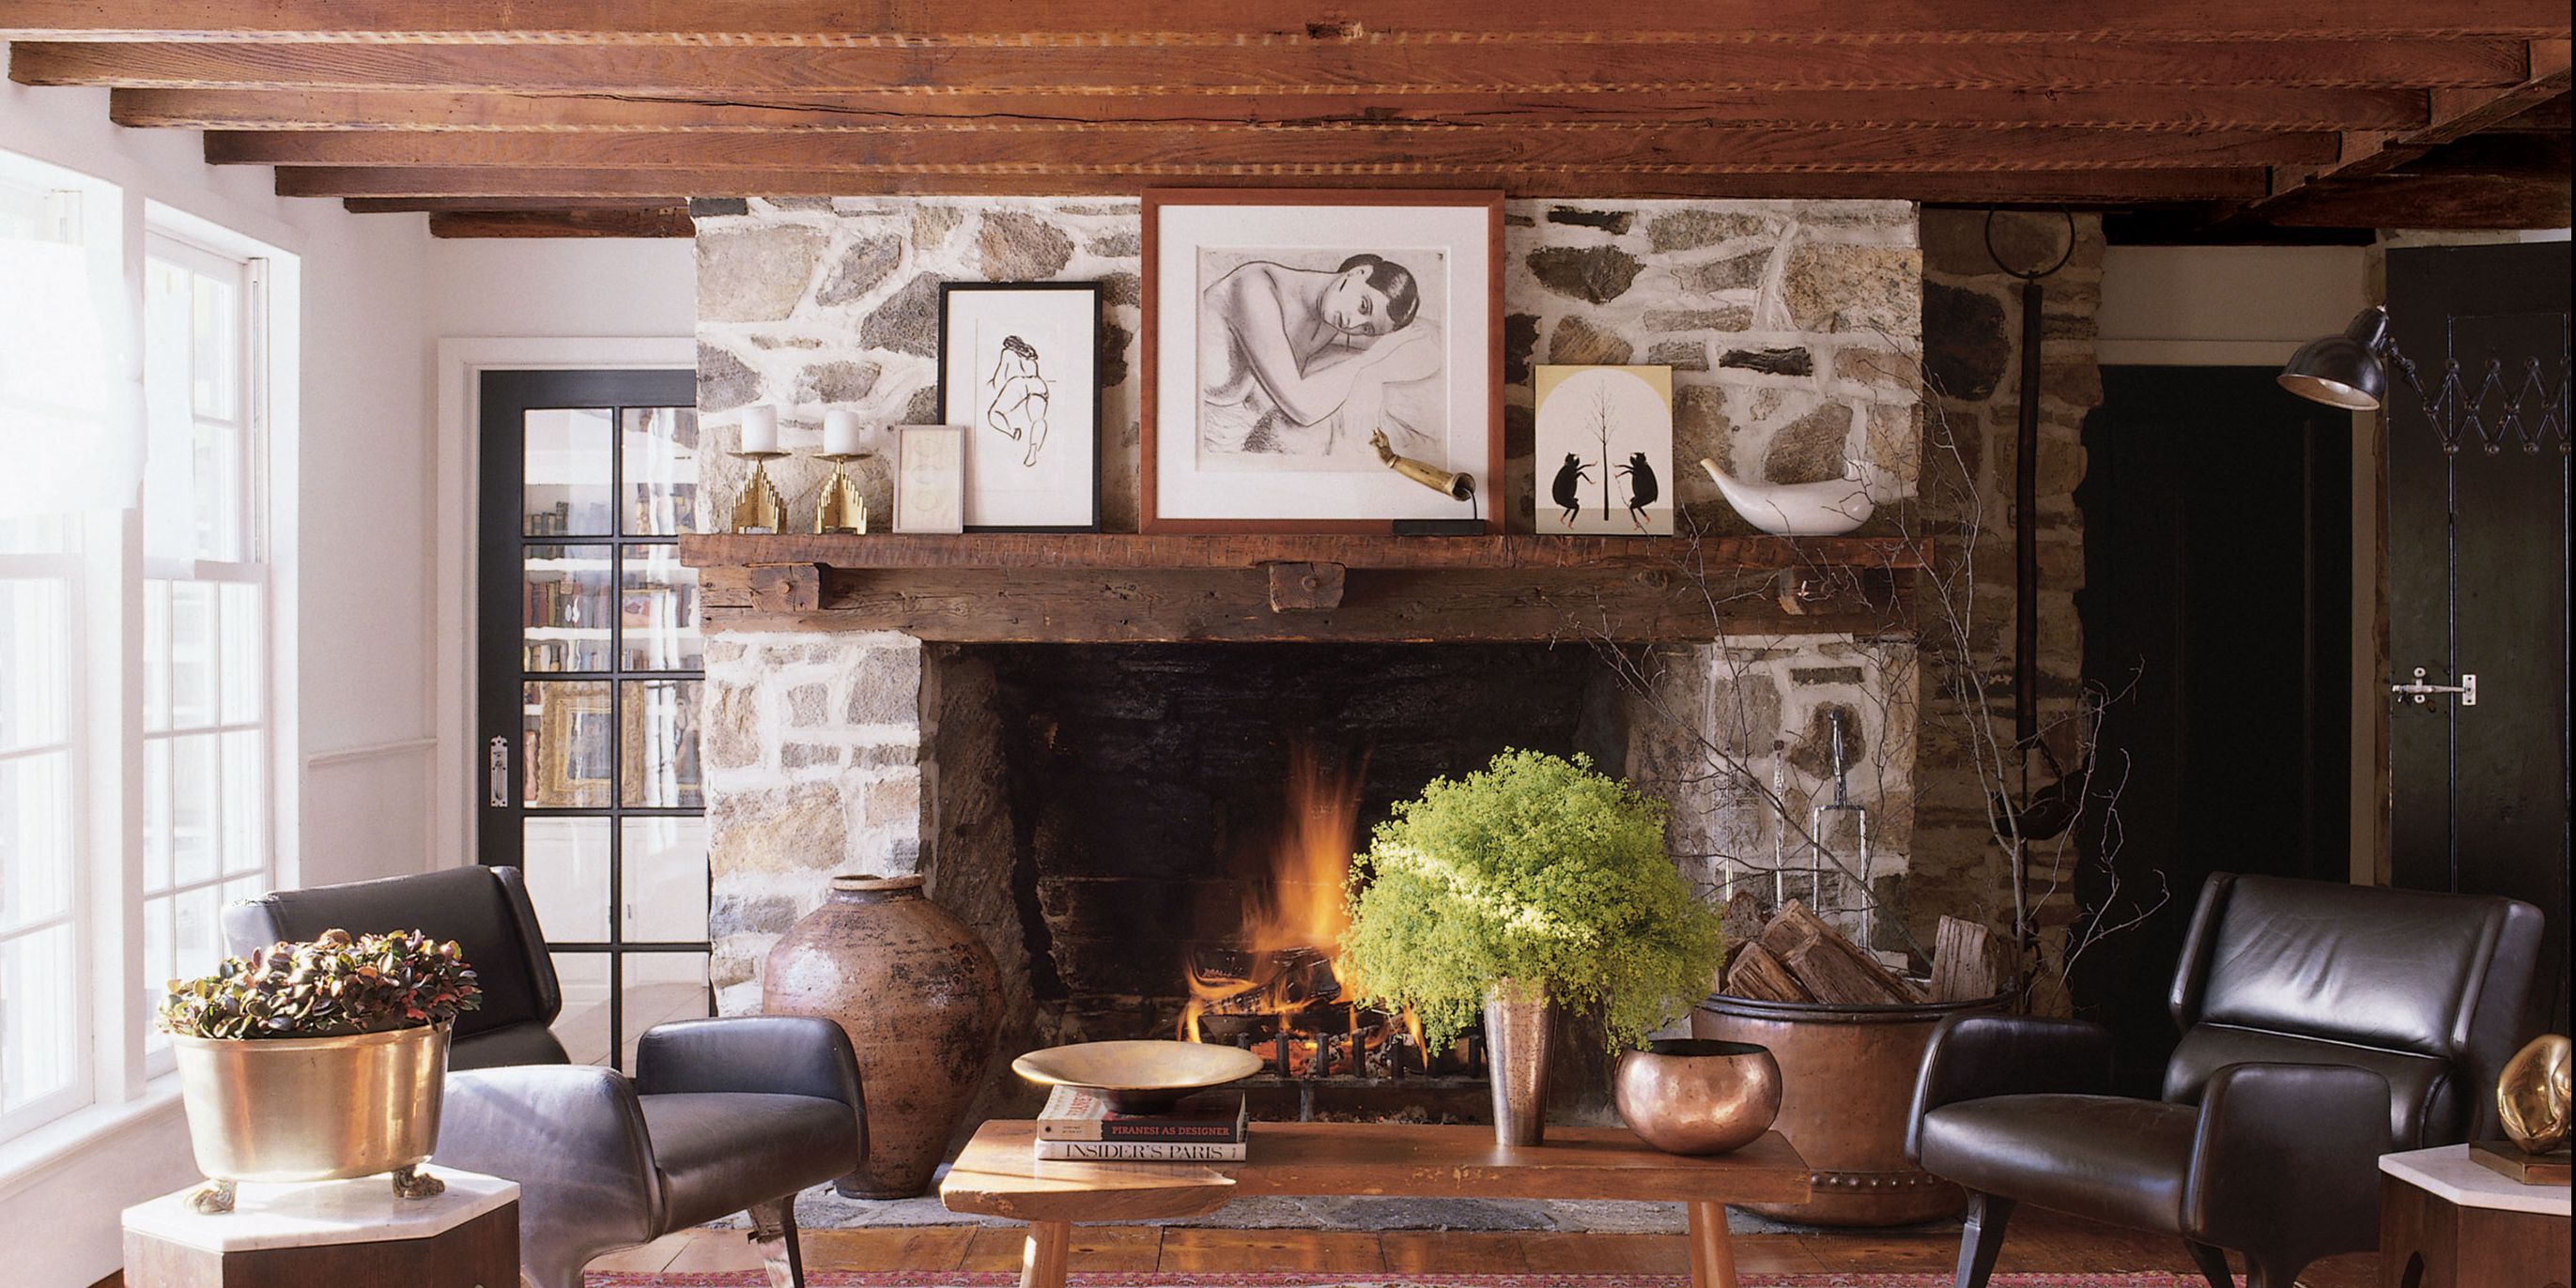 24 Unique Fireplace Mantel Ideas u2013 Modern Fireplace Designs